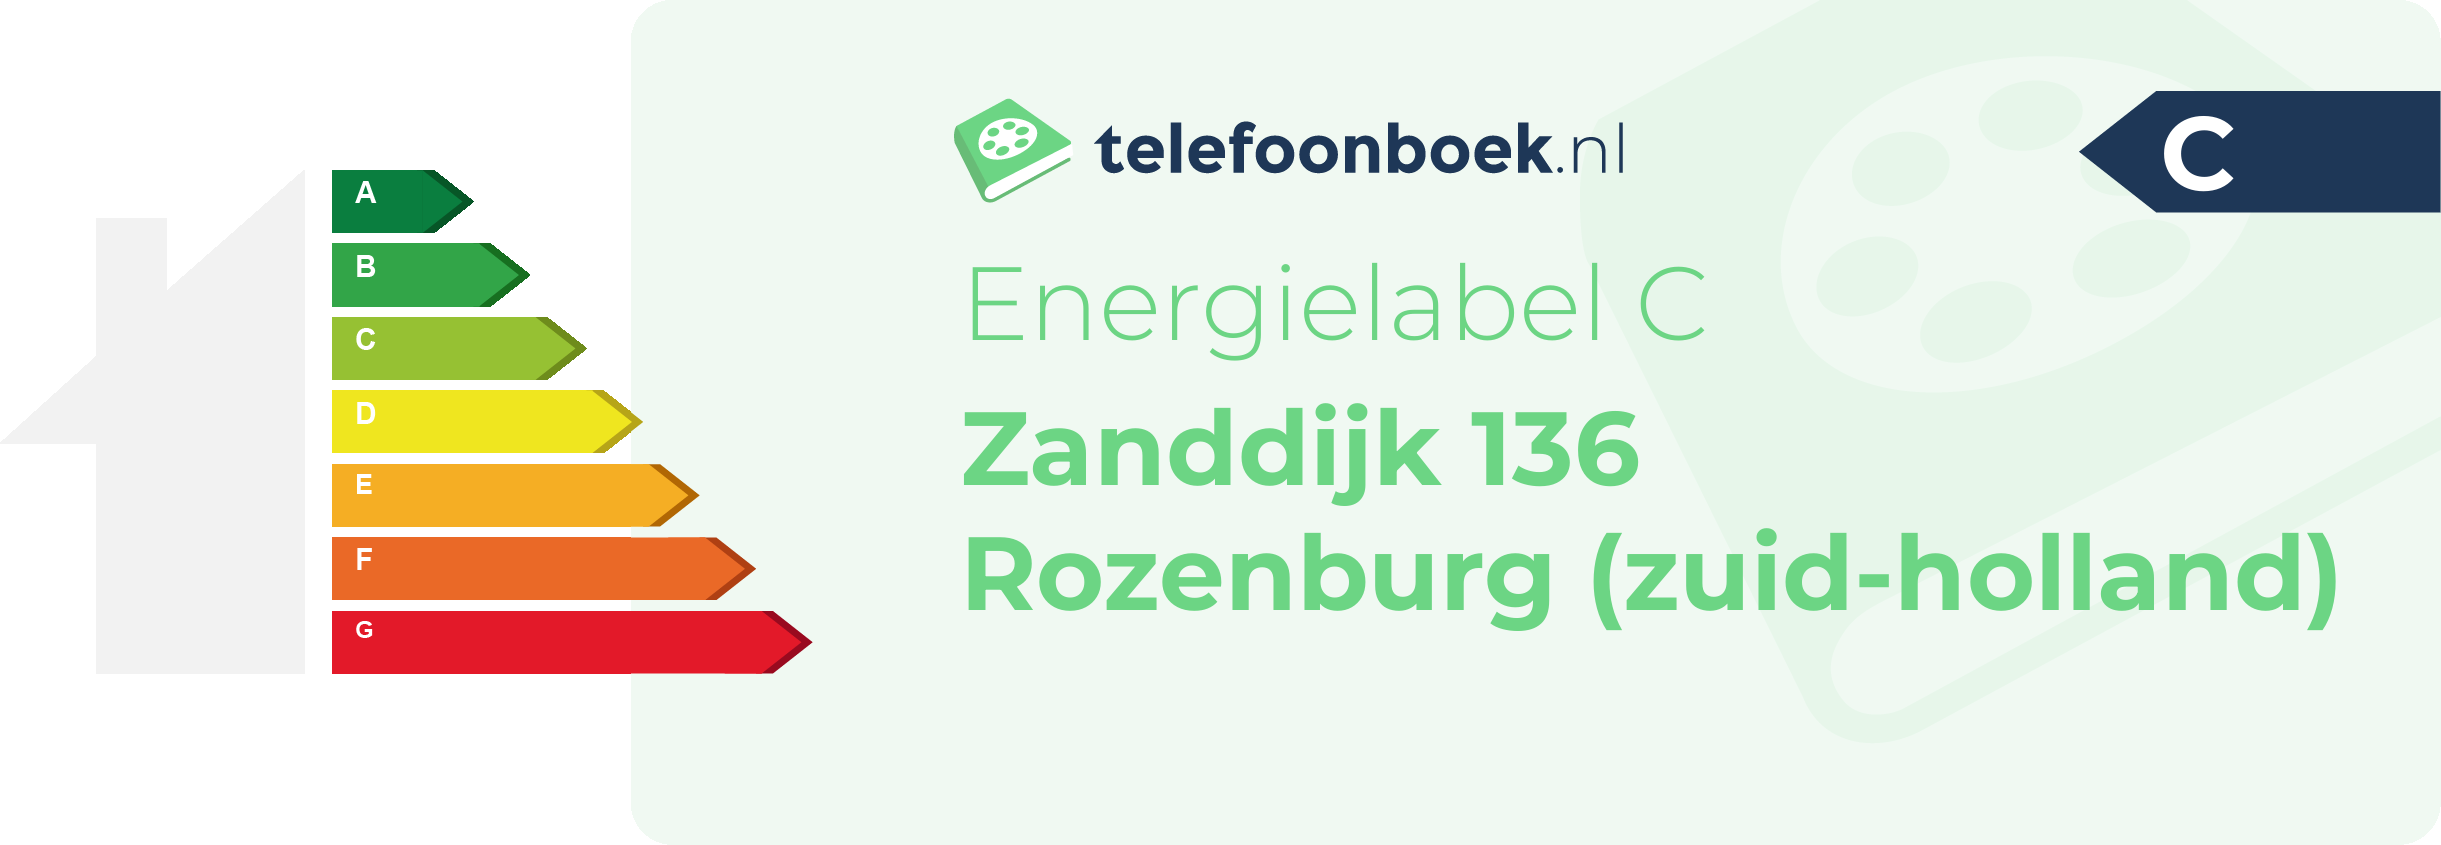 Energielabel Zanddijk 136 Rozenburg (Zuid-Holland)